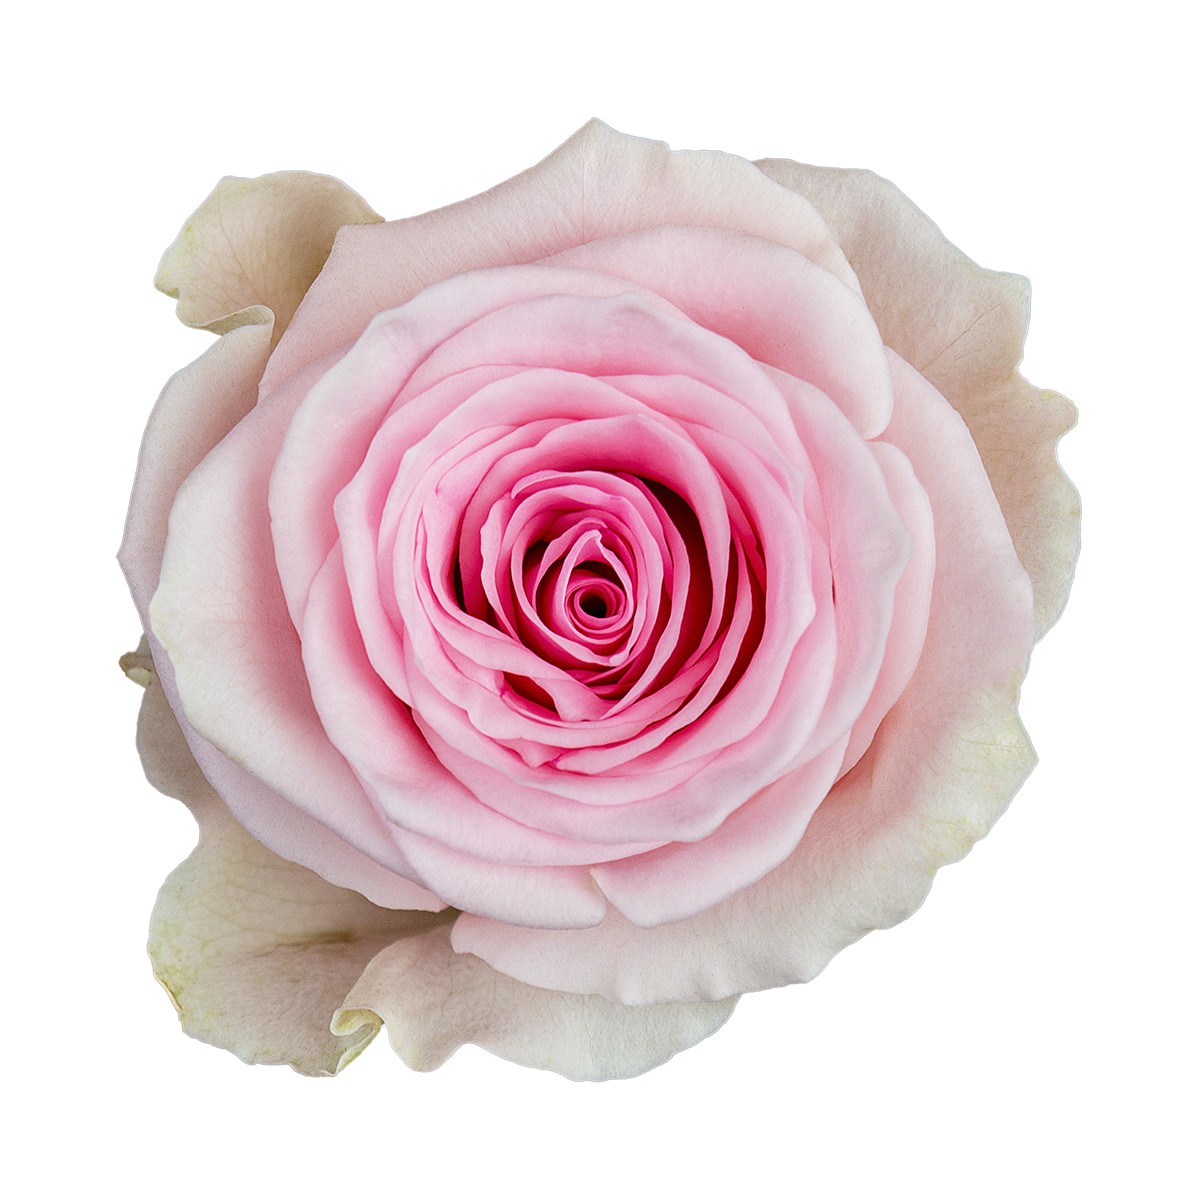 DUCHESSE rose - Florist Rose Paradise! - Decofresh TOTF2020 on Thursd